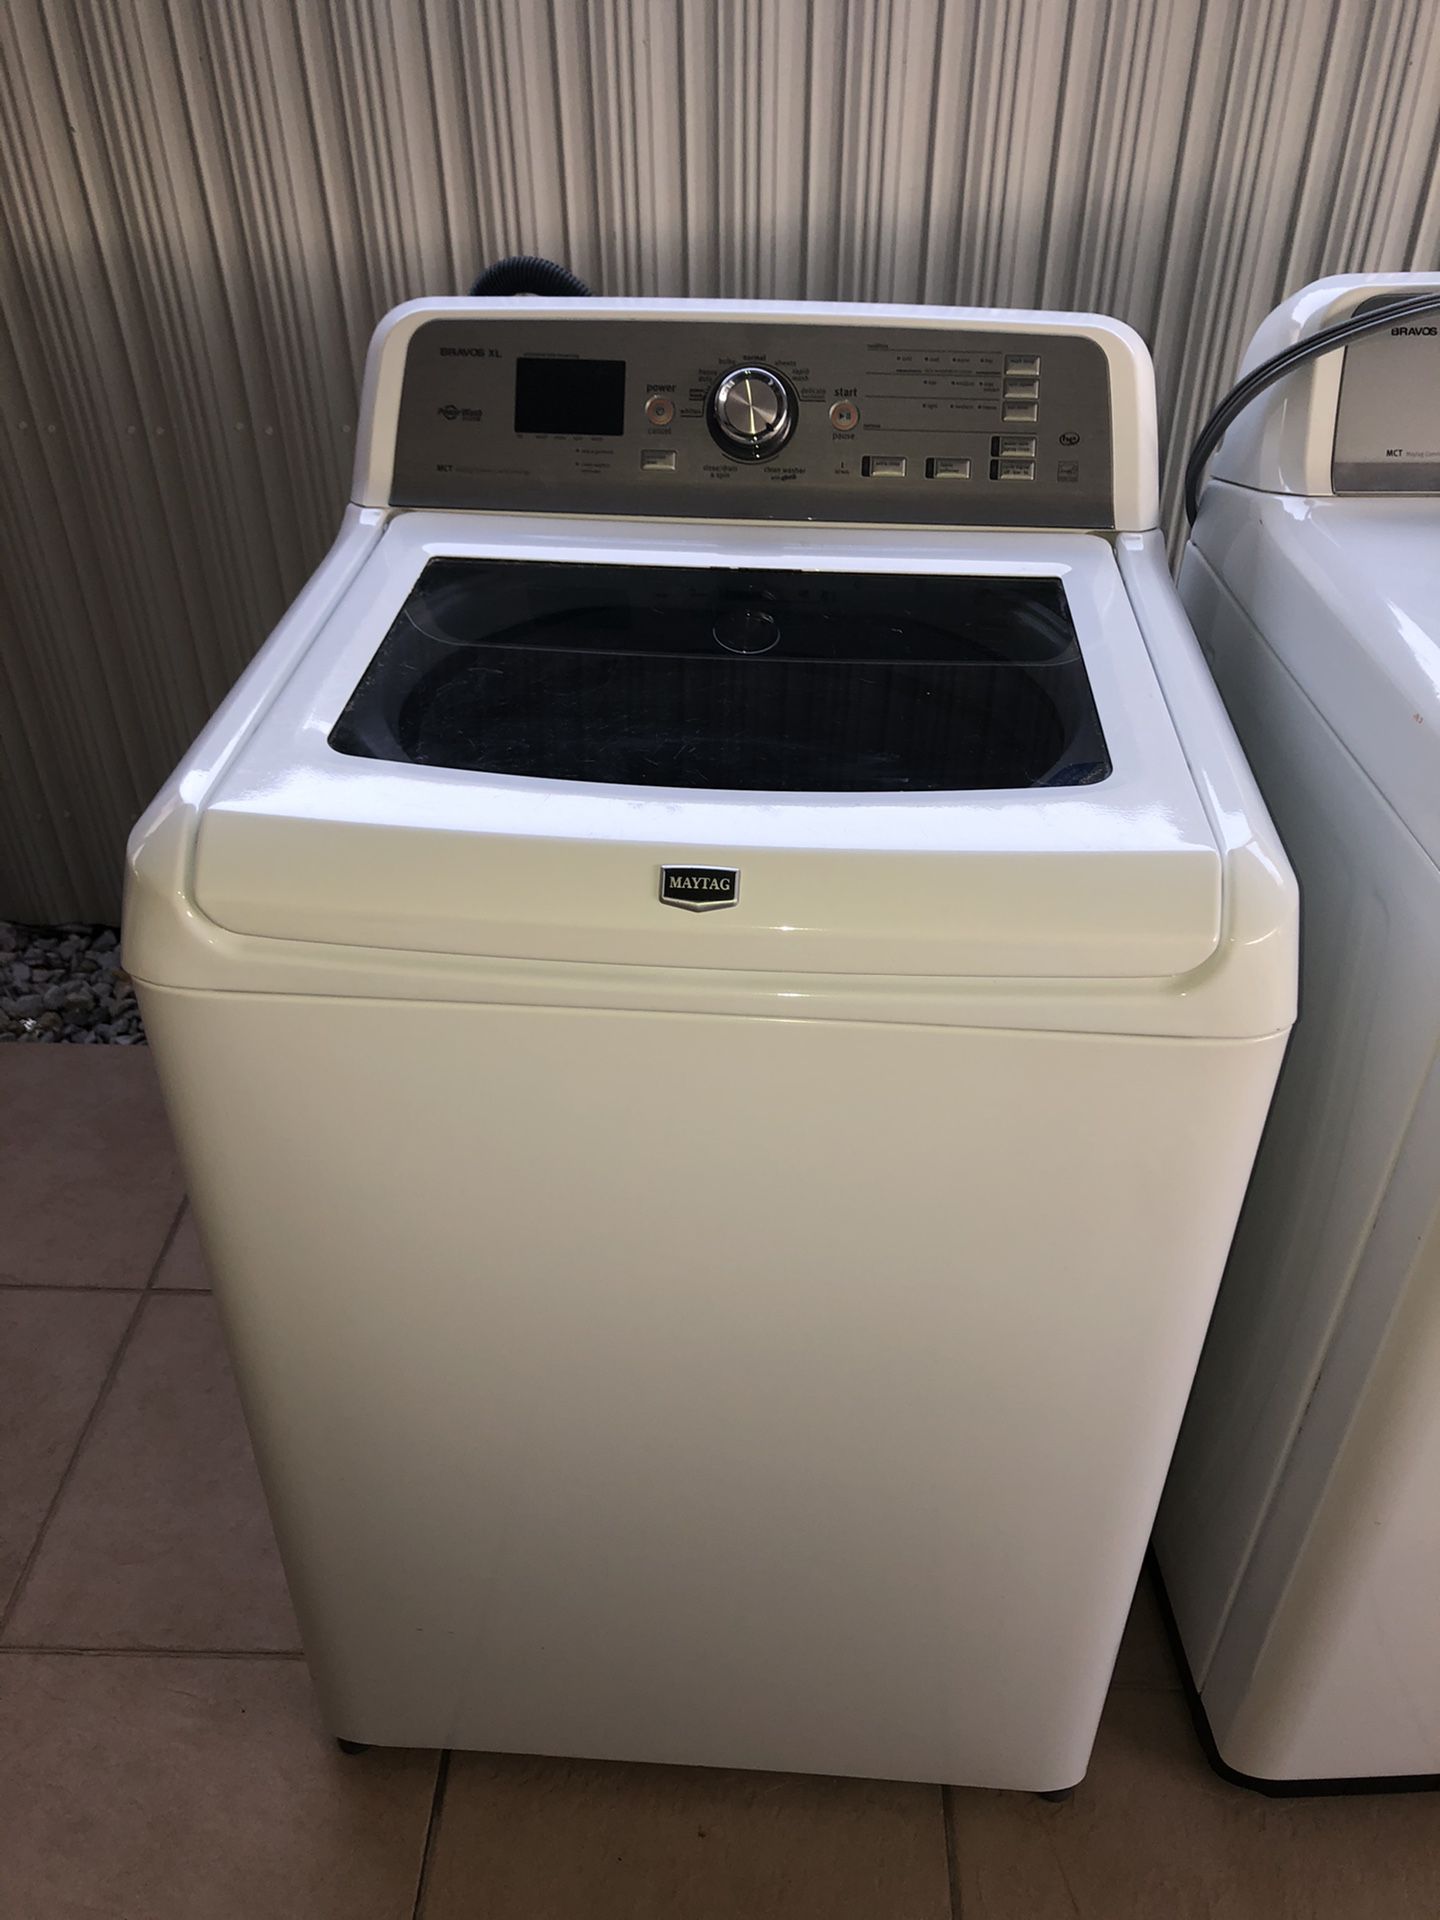 Maytag Bravos XL washer and dryer.